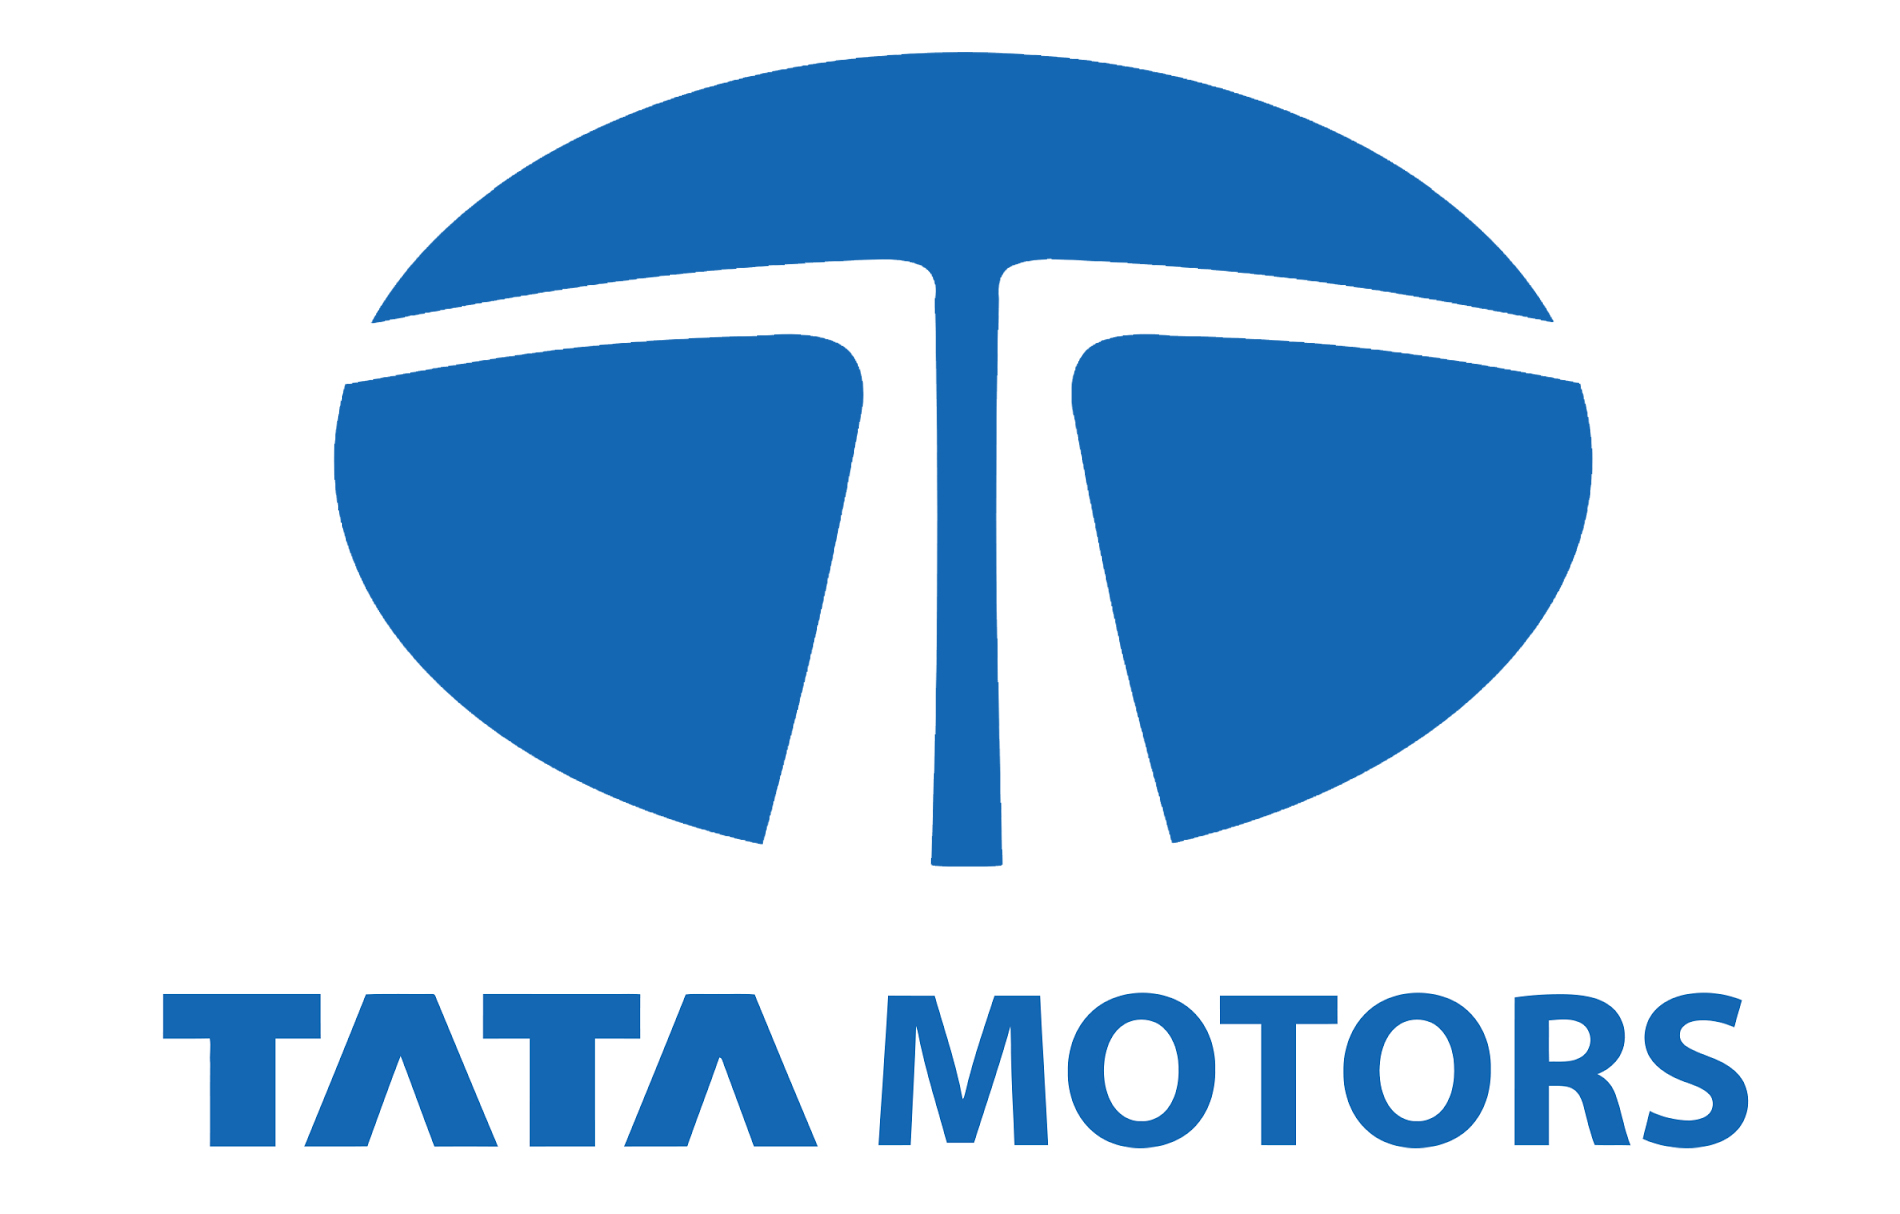 Tata Motors Cars Showroom - Champak Automobiles Private Limited|Show Room|Automotive